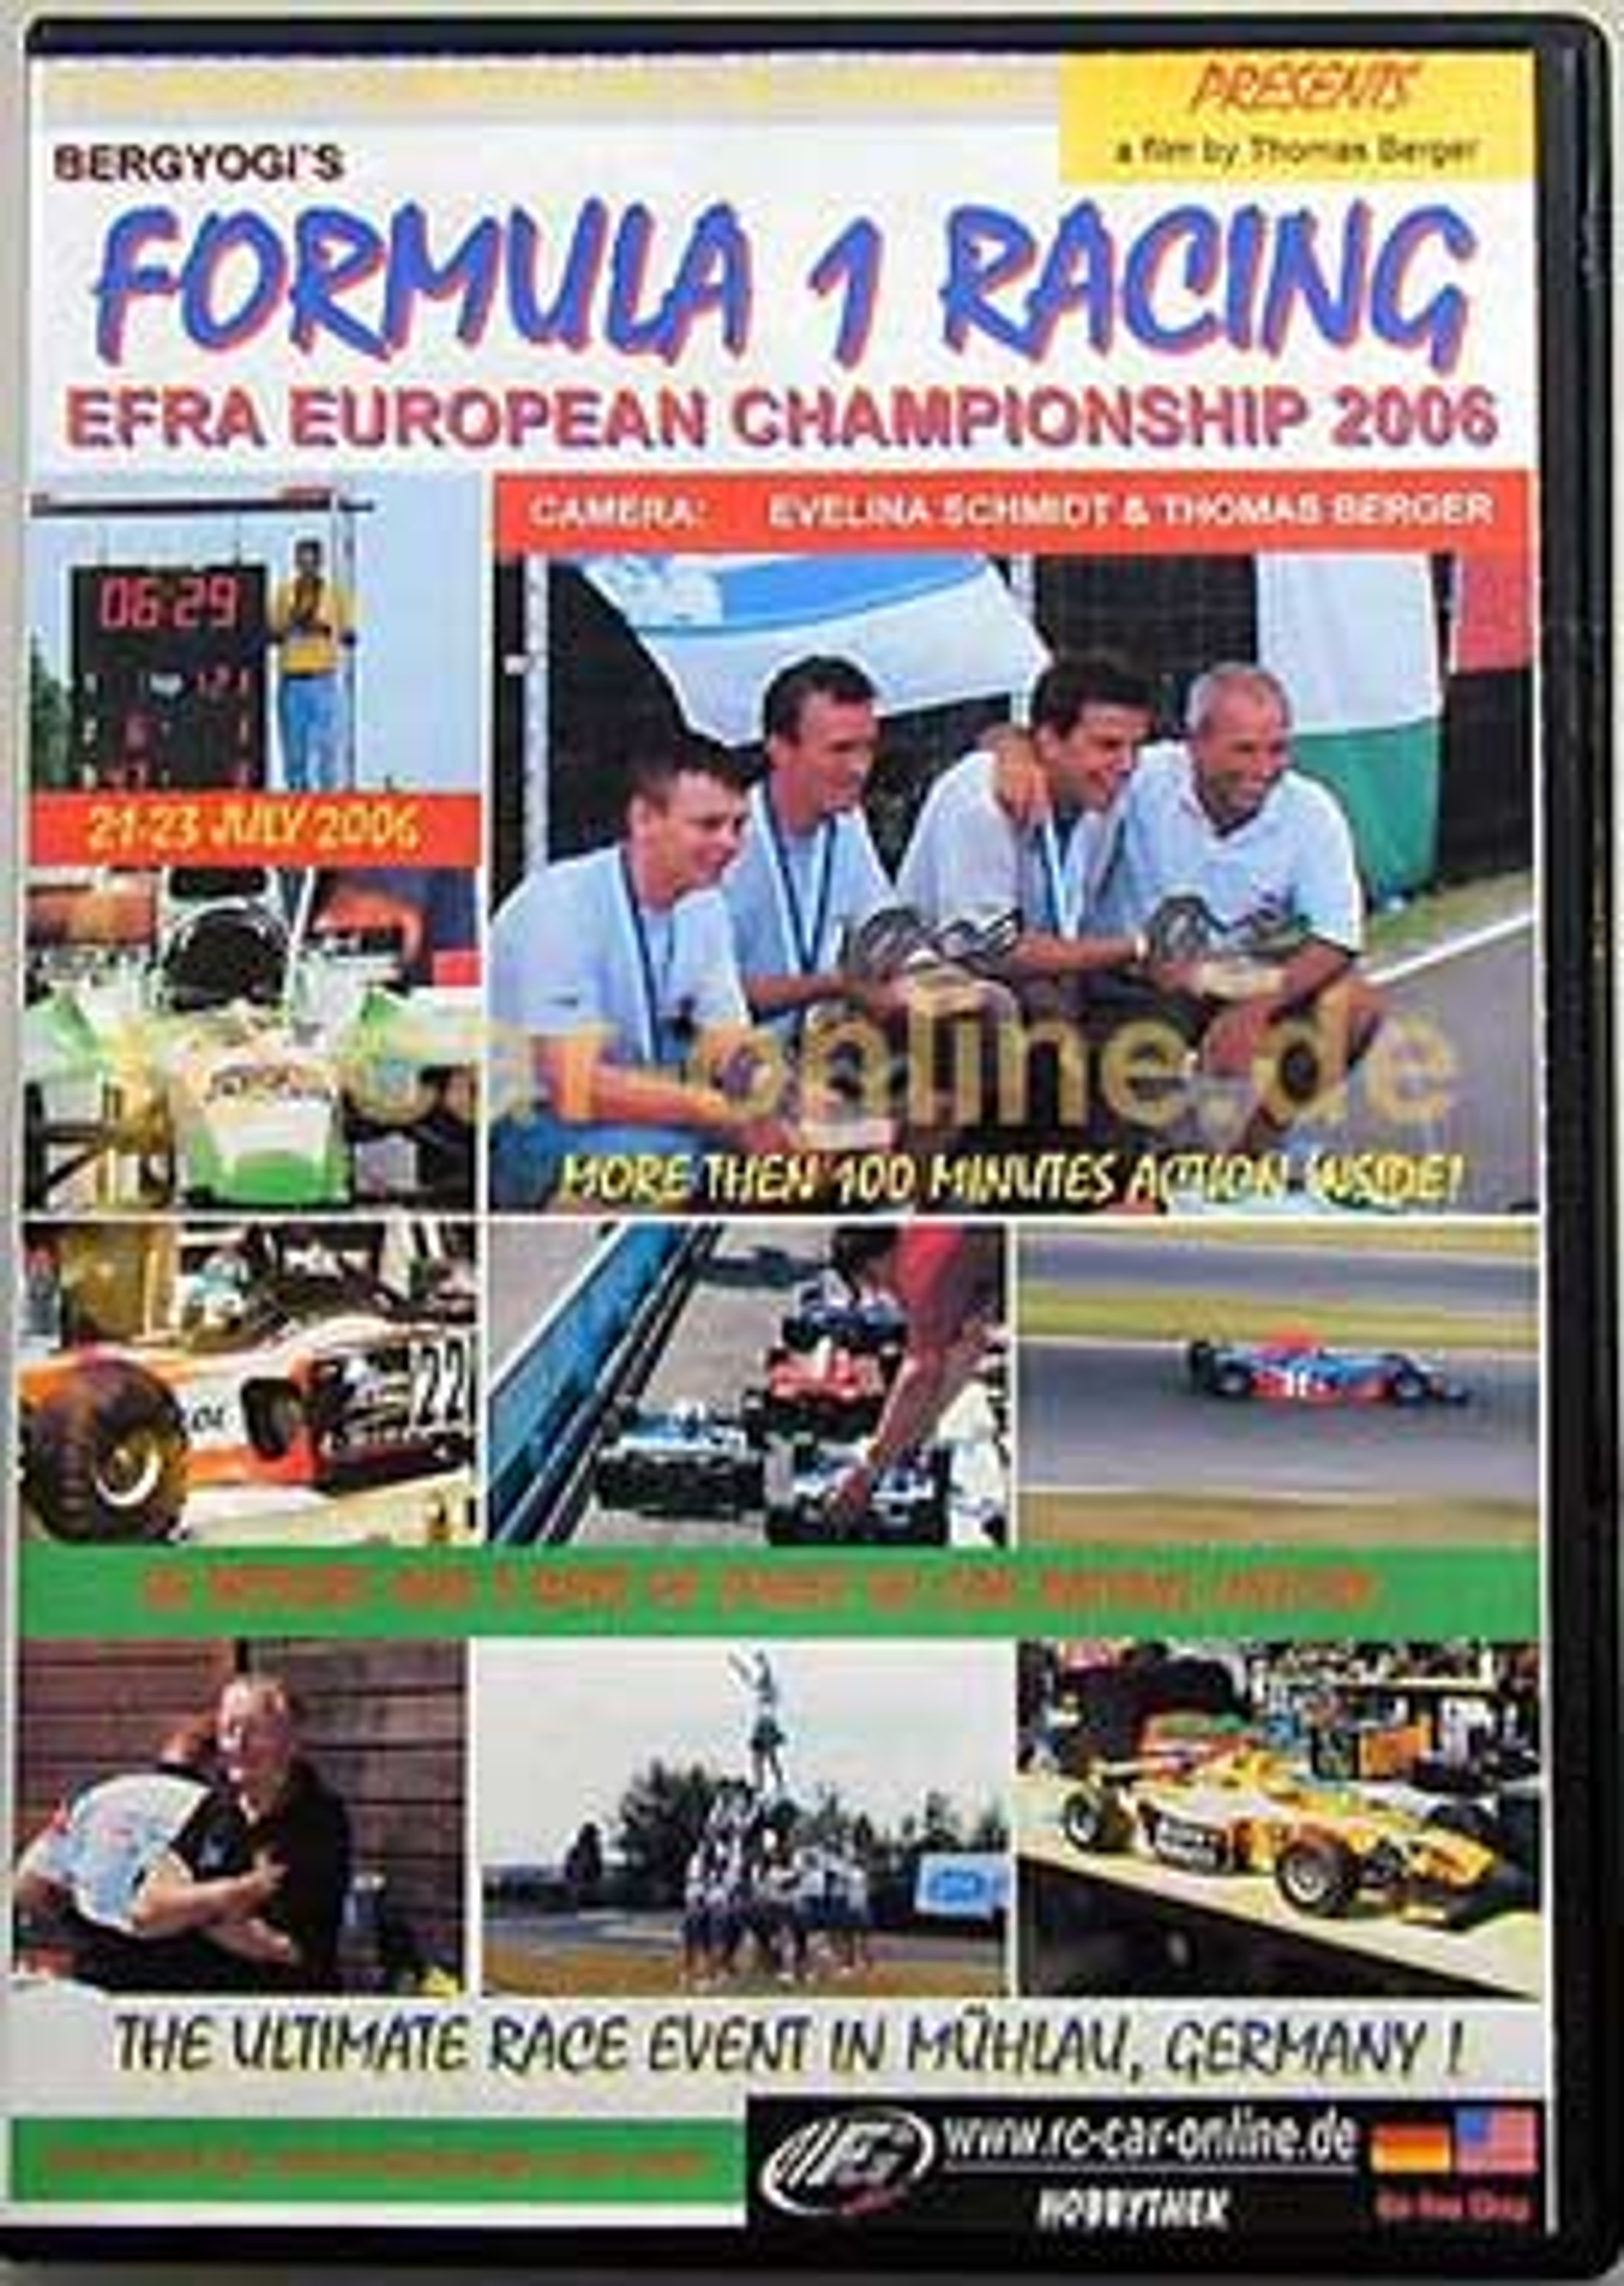 Bergyogi DVD Europameisterschaft Formel 1 2006, y0853